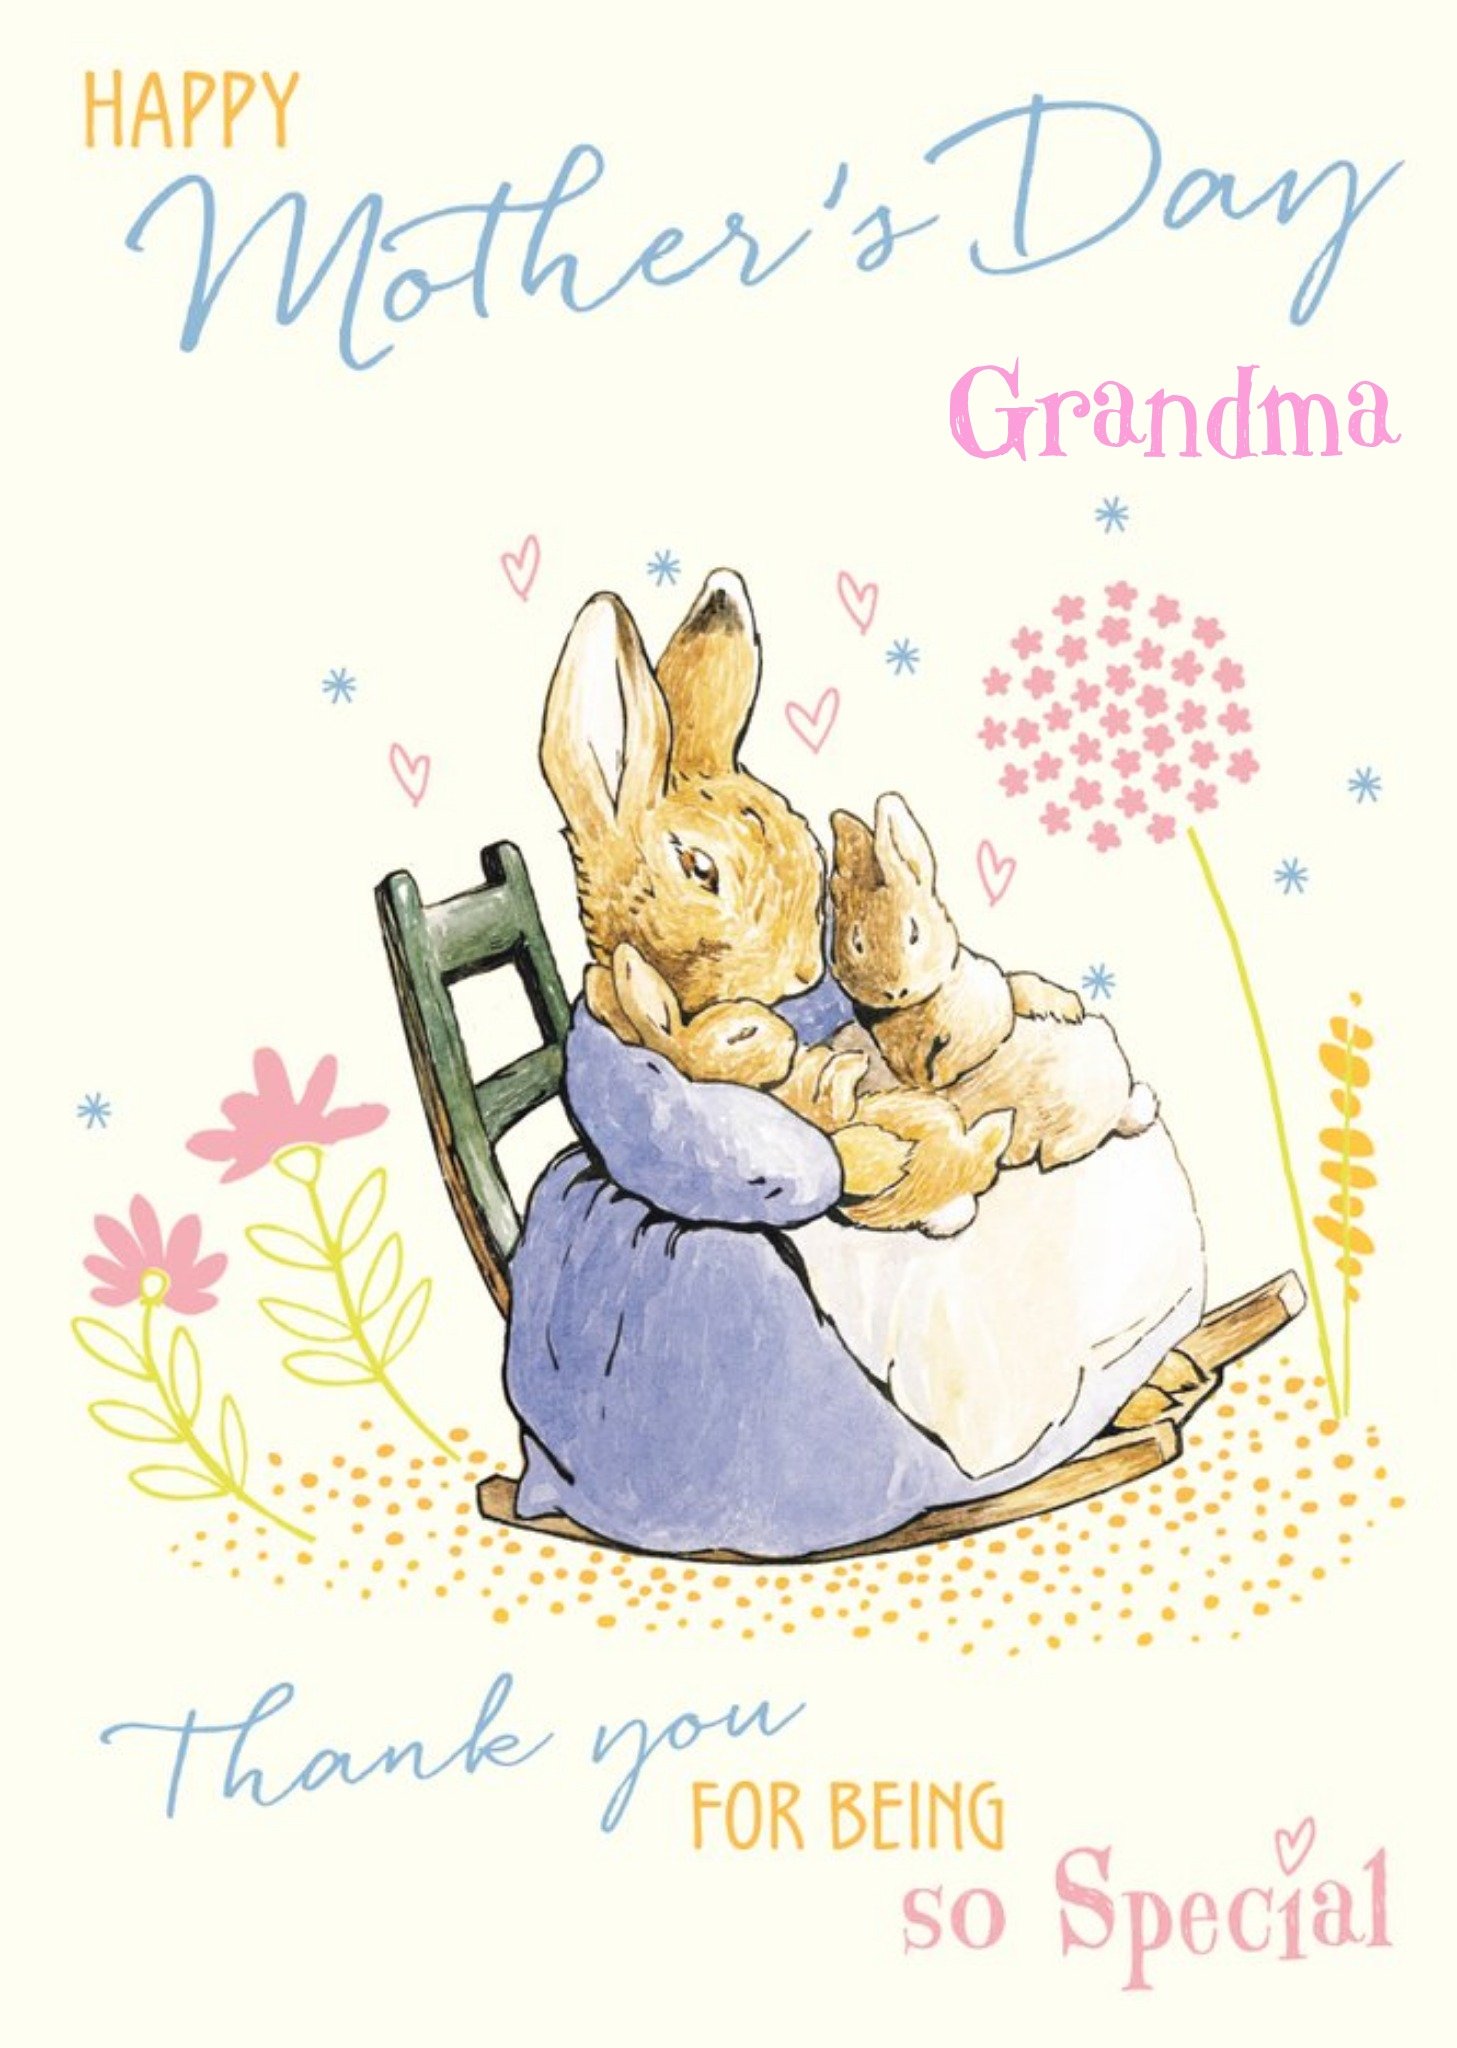 Beatrix Potter Peter Rabbit Happy Mothers Day Grandma Card, Large